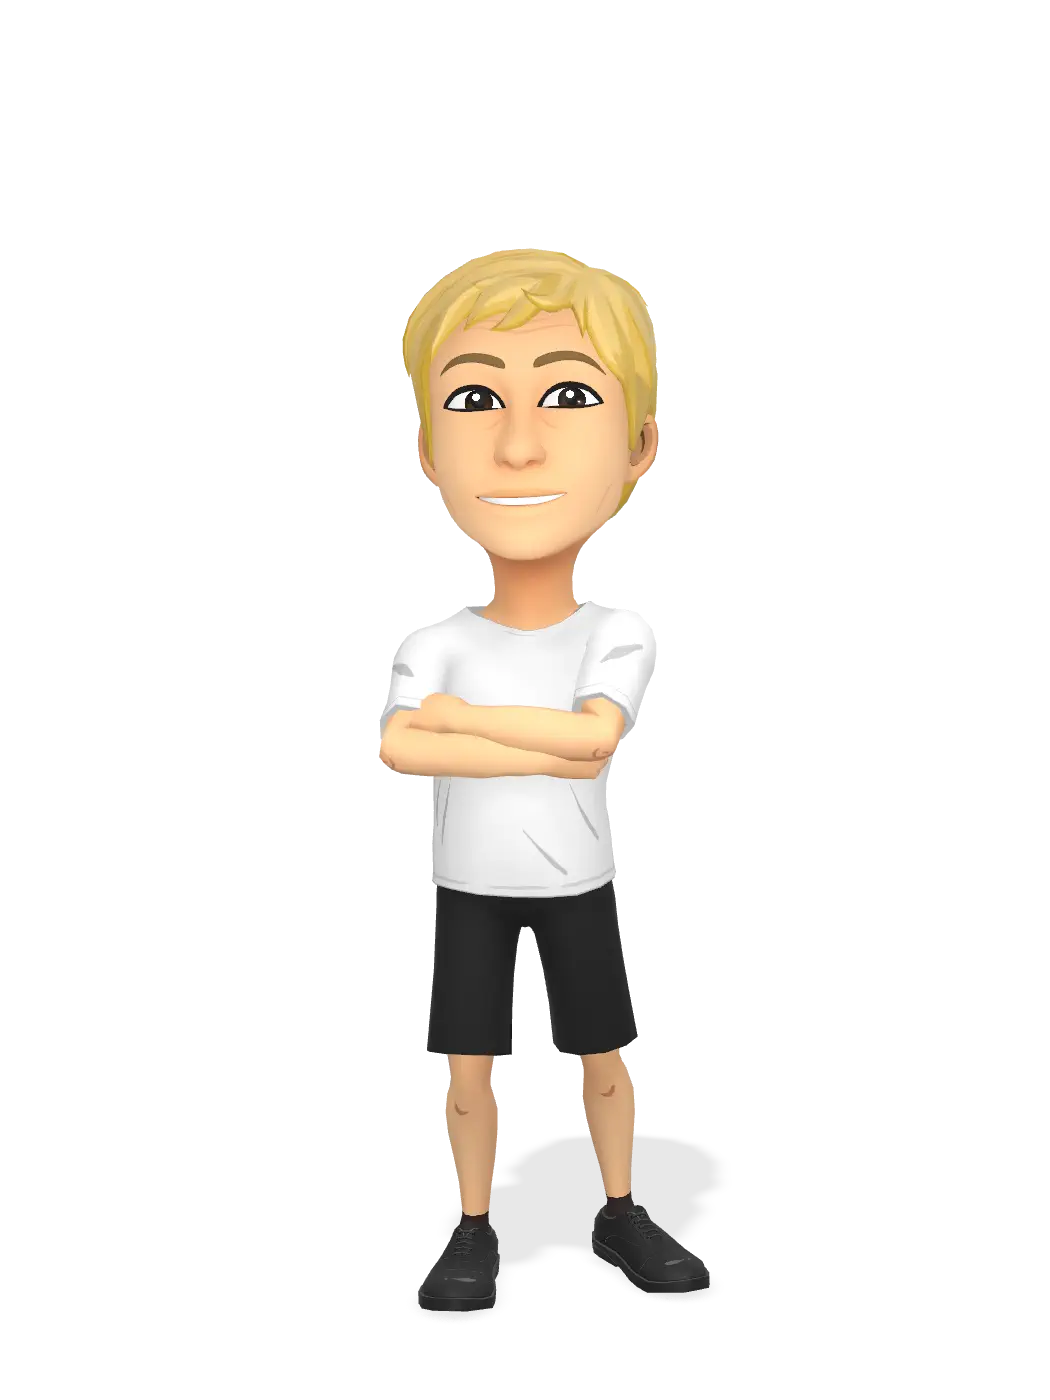 3D Bitmoji for filipkrstinic avatar